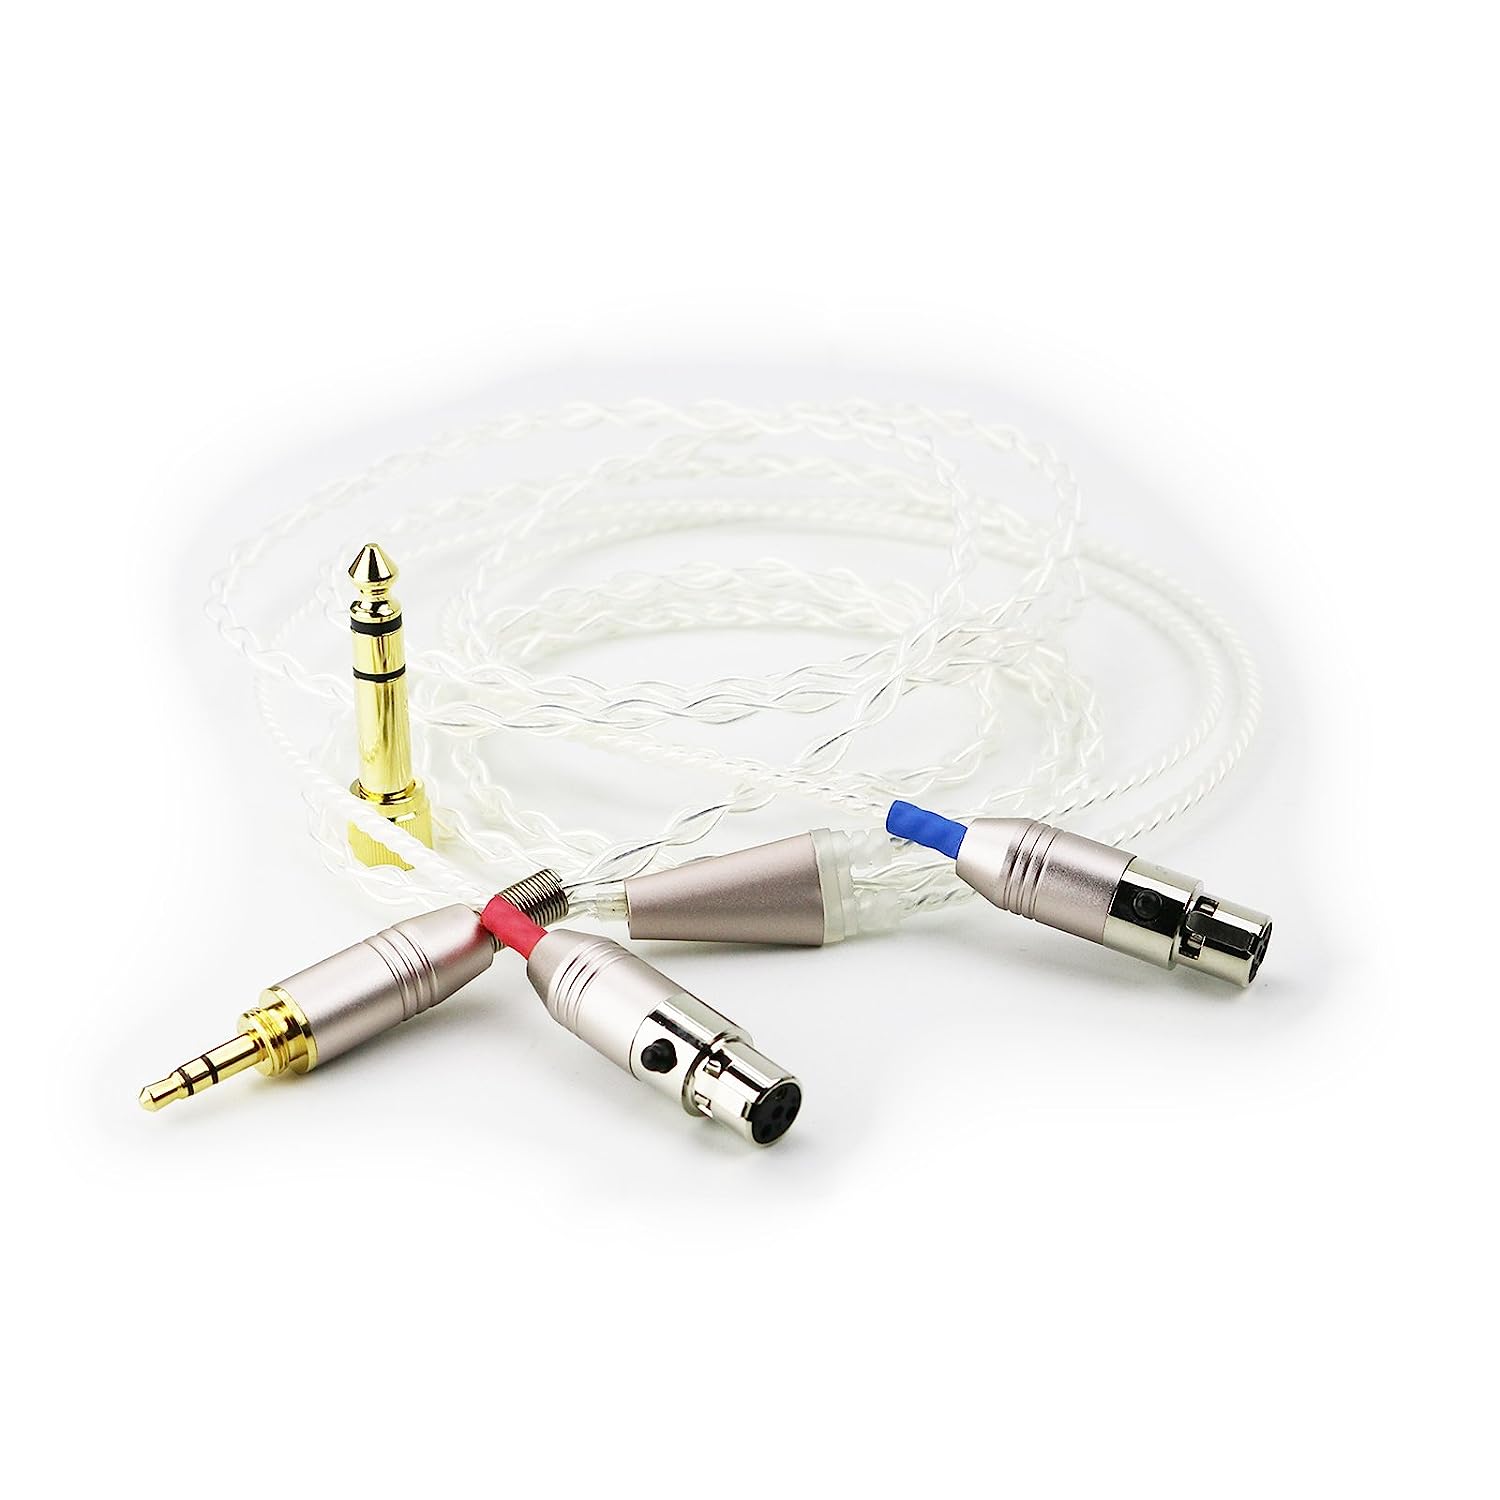 NewFantasia Replacement Audio Upgrade Cable for Audeze [...]